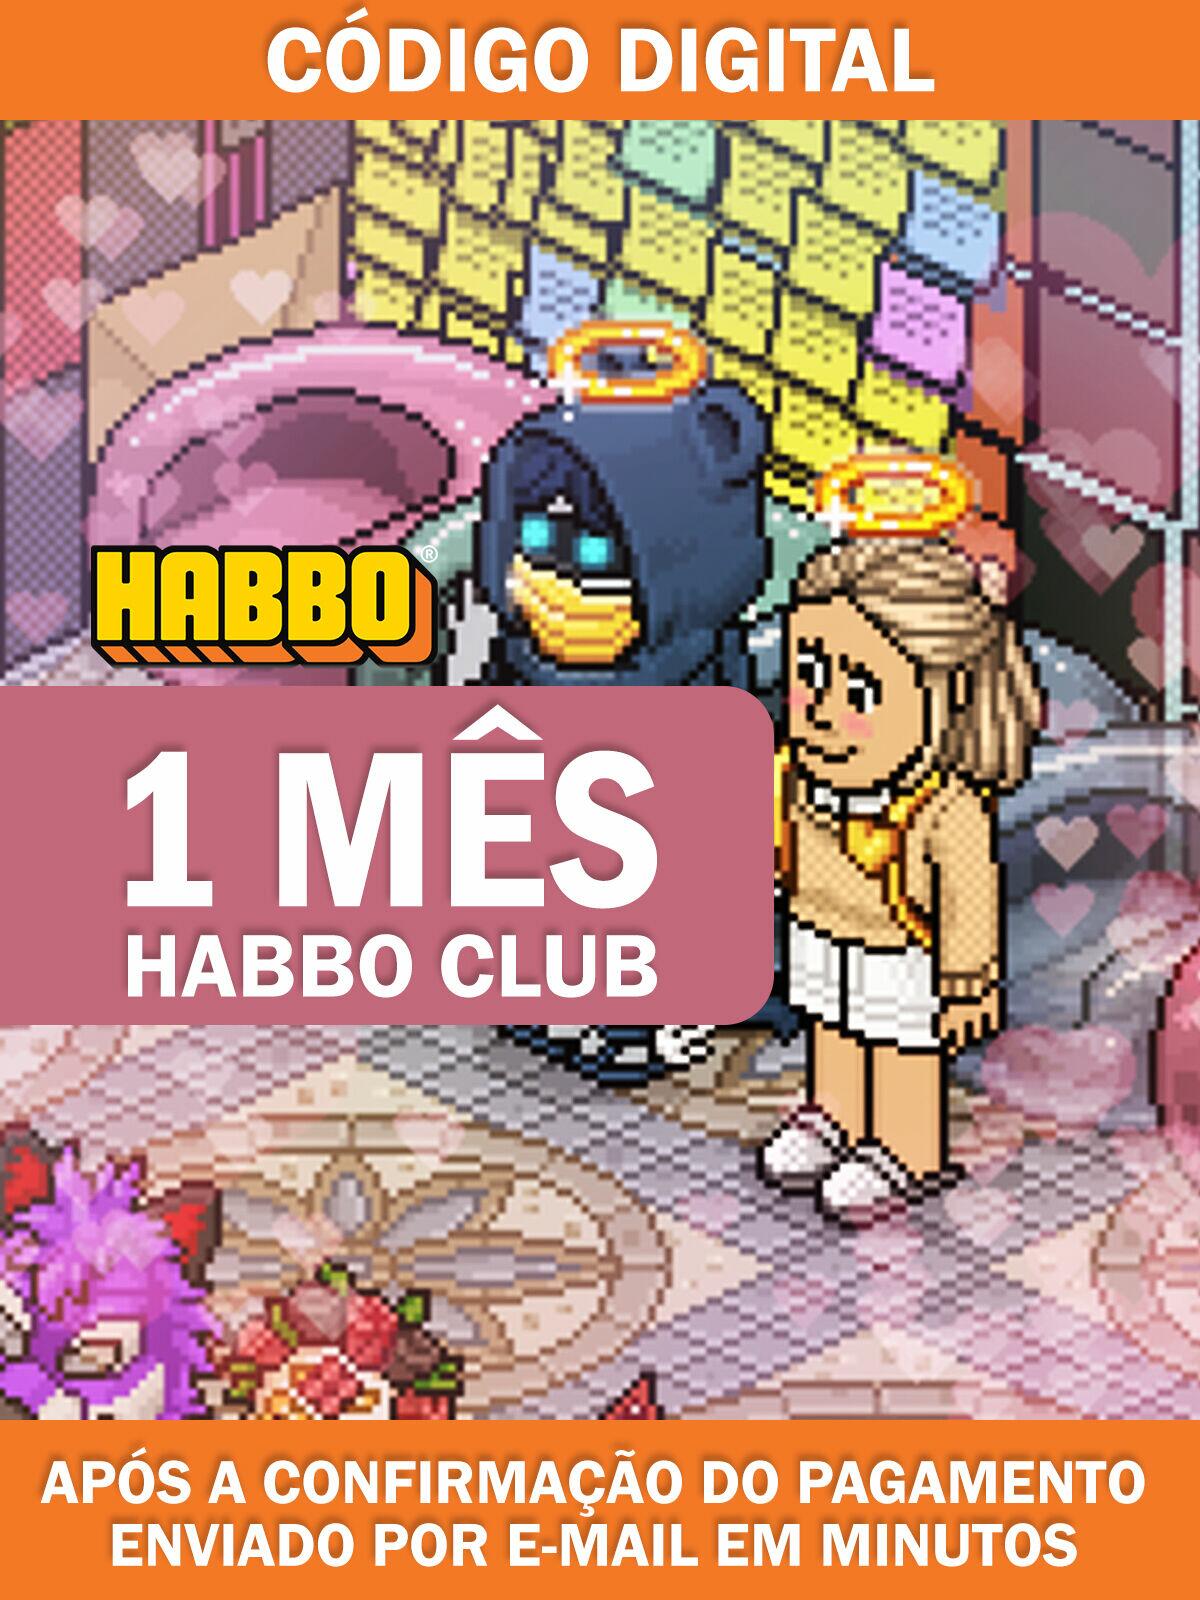 Comprar HABBO: 1 MÊS HABBO CLUB - a partir de R$15,00 - Serpudo | A Casa  dos Gamers